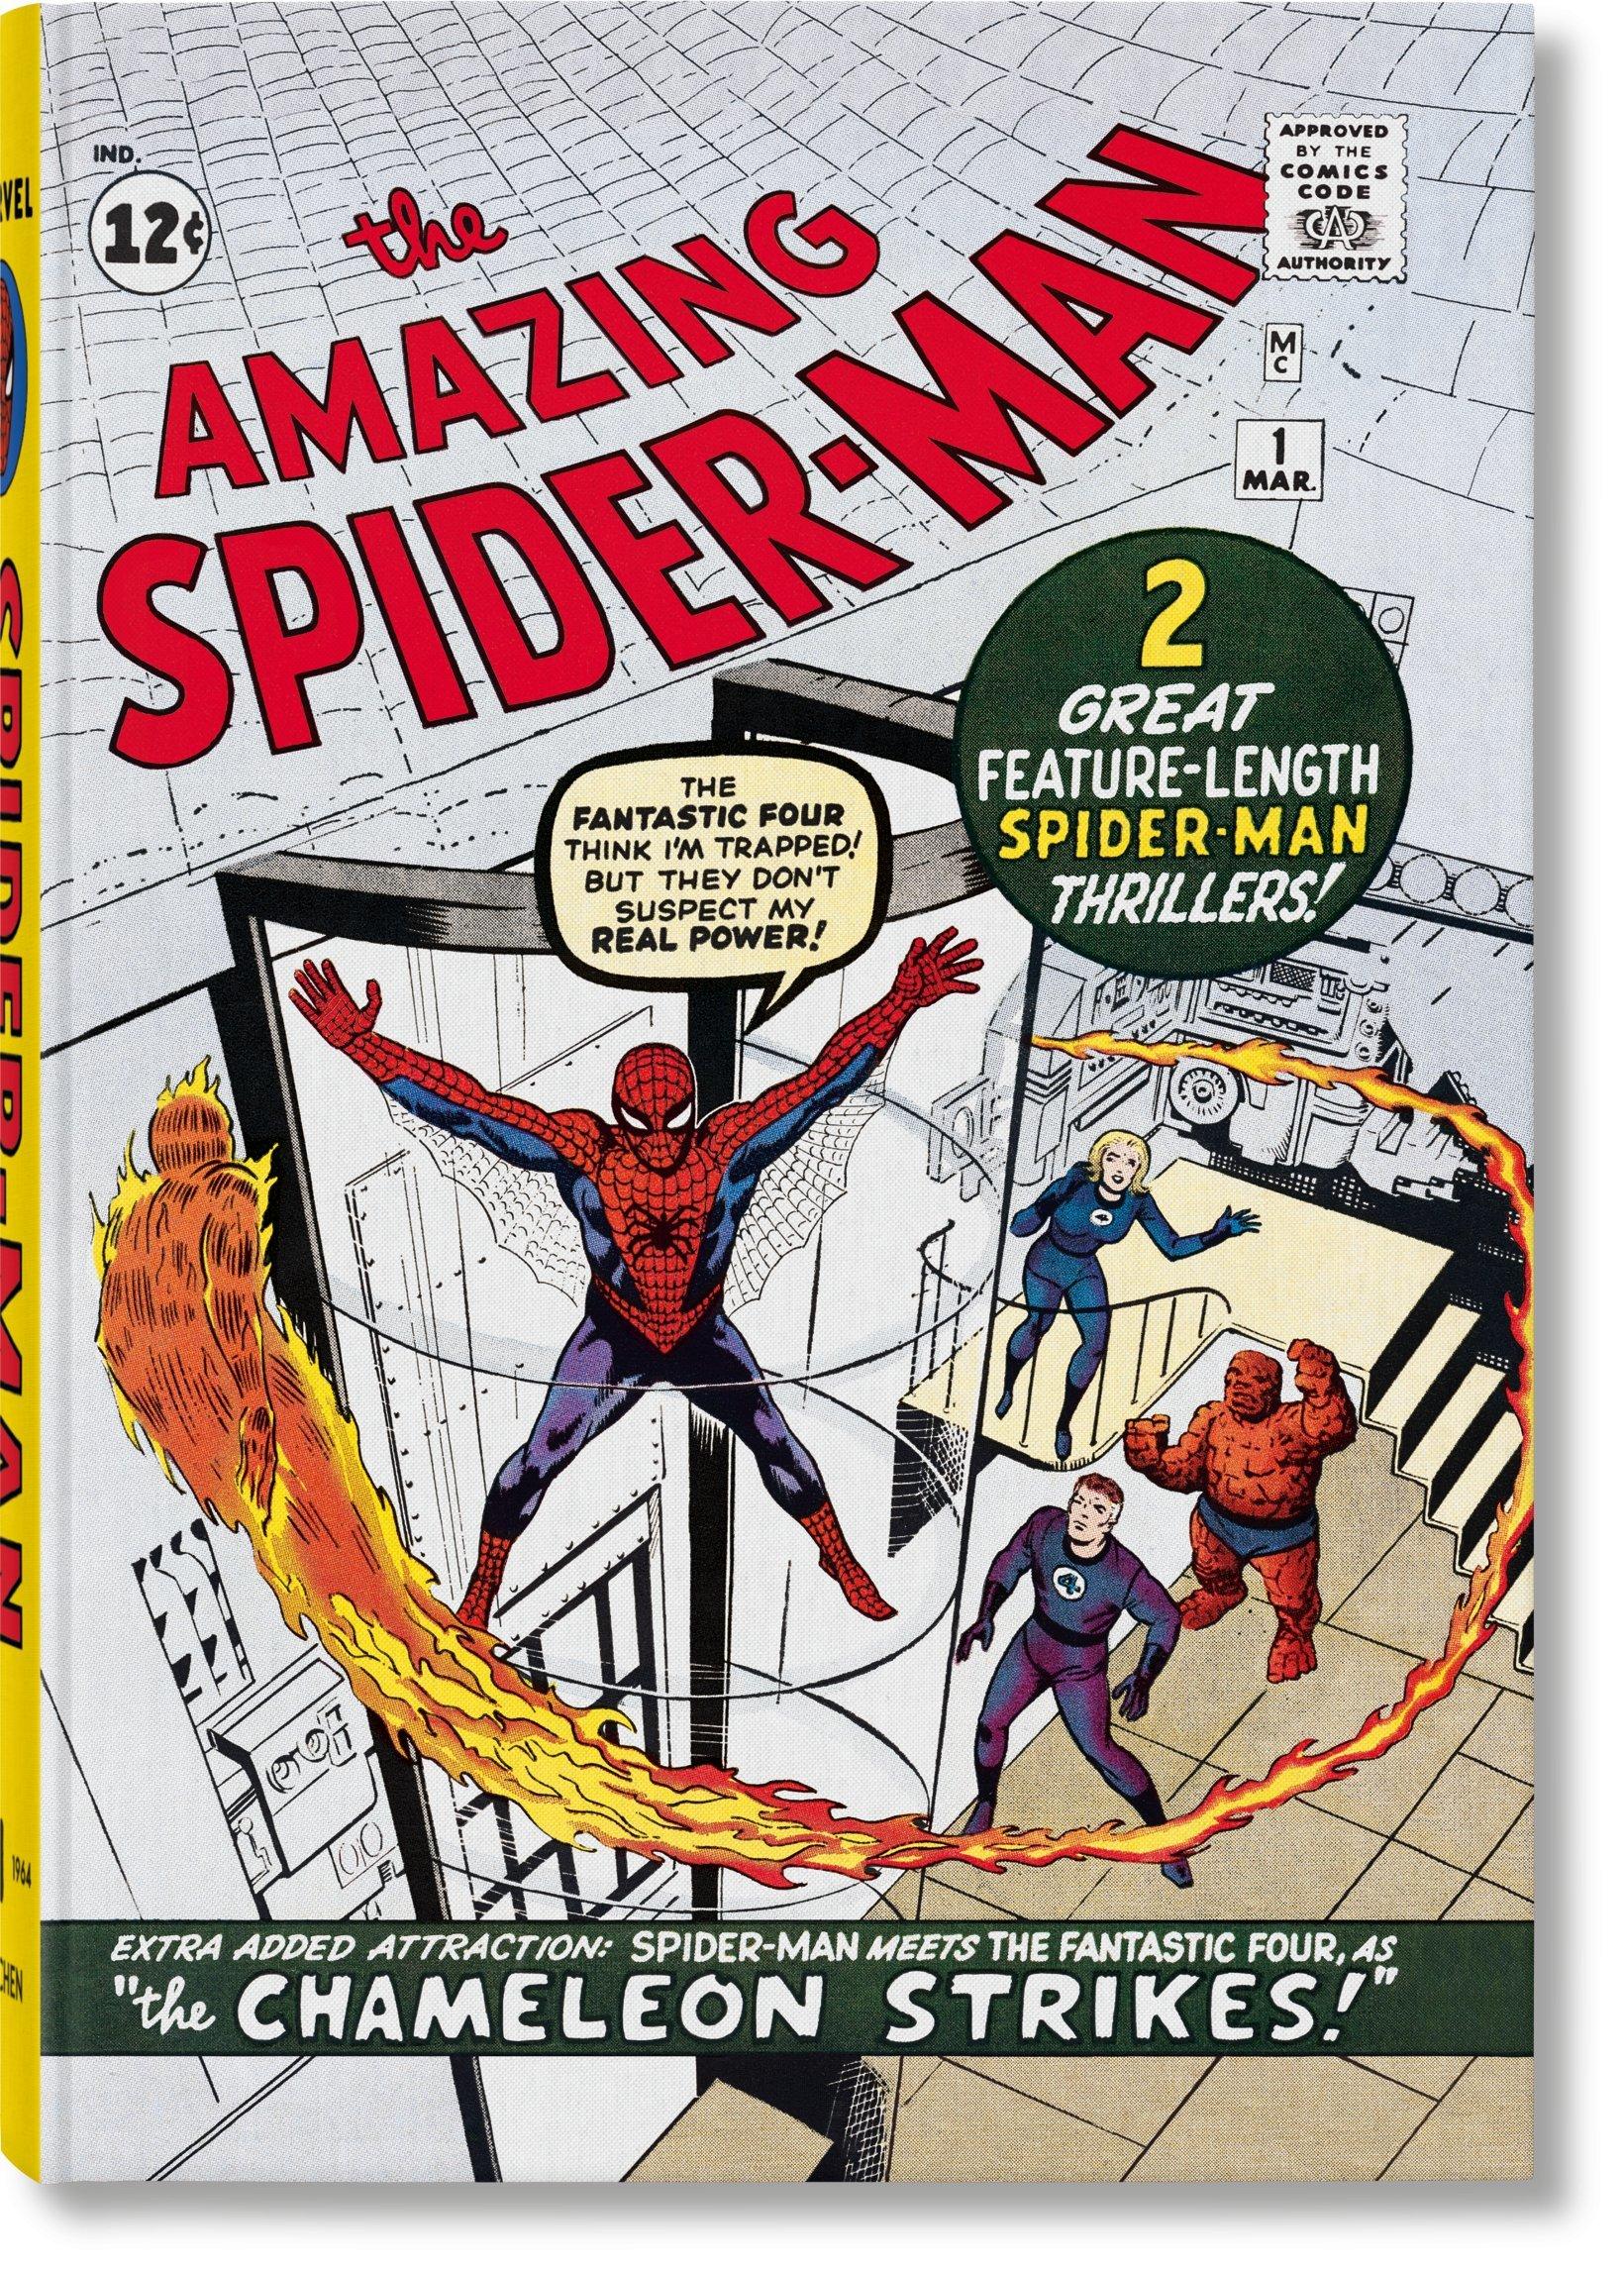 Contemporary The Marvel Comics Library, Spider-Man, Vol. 1, 1962–1964. XXL Book